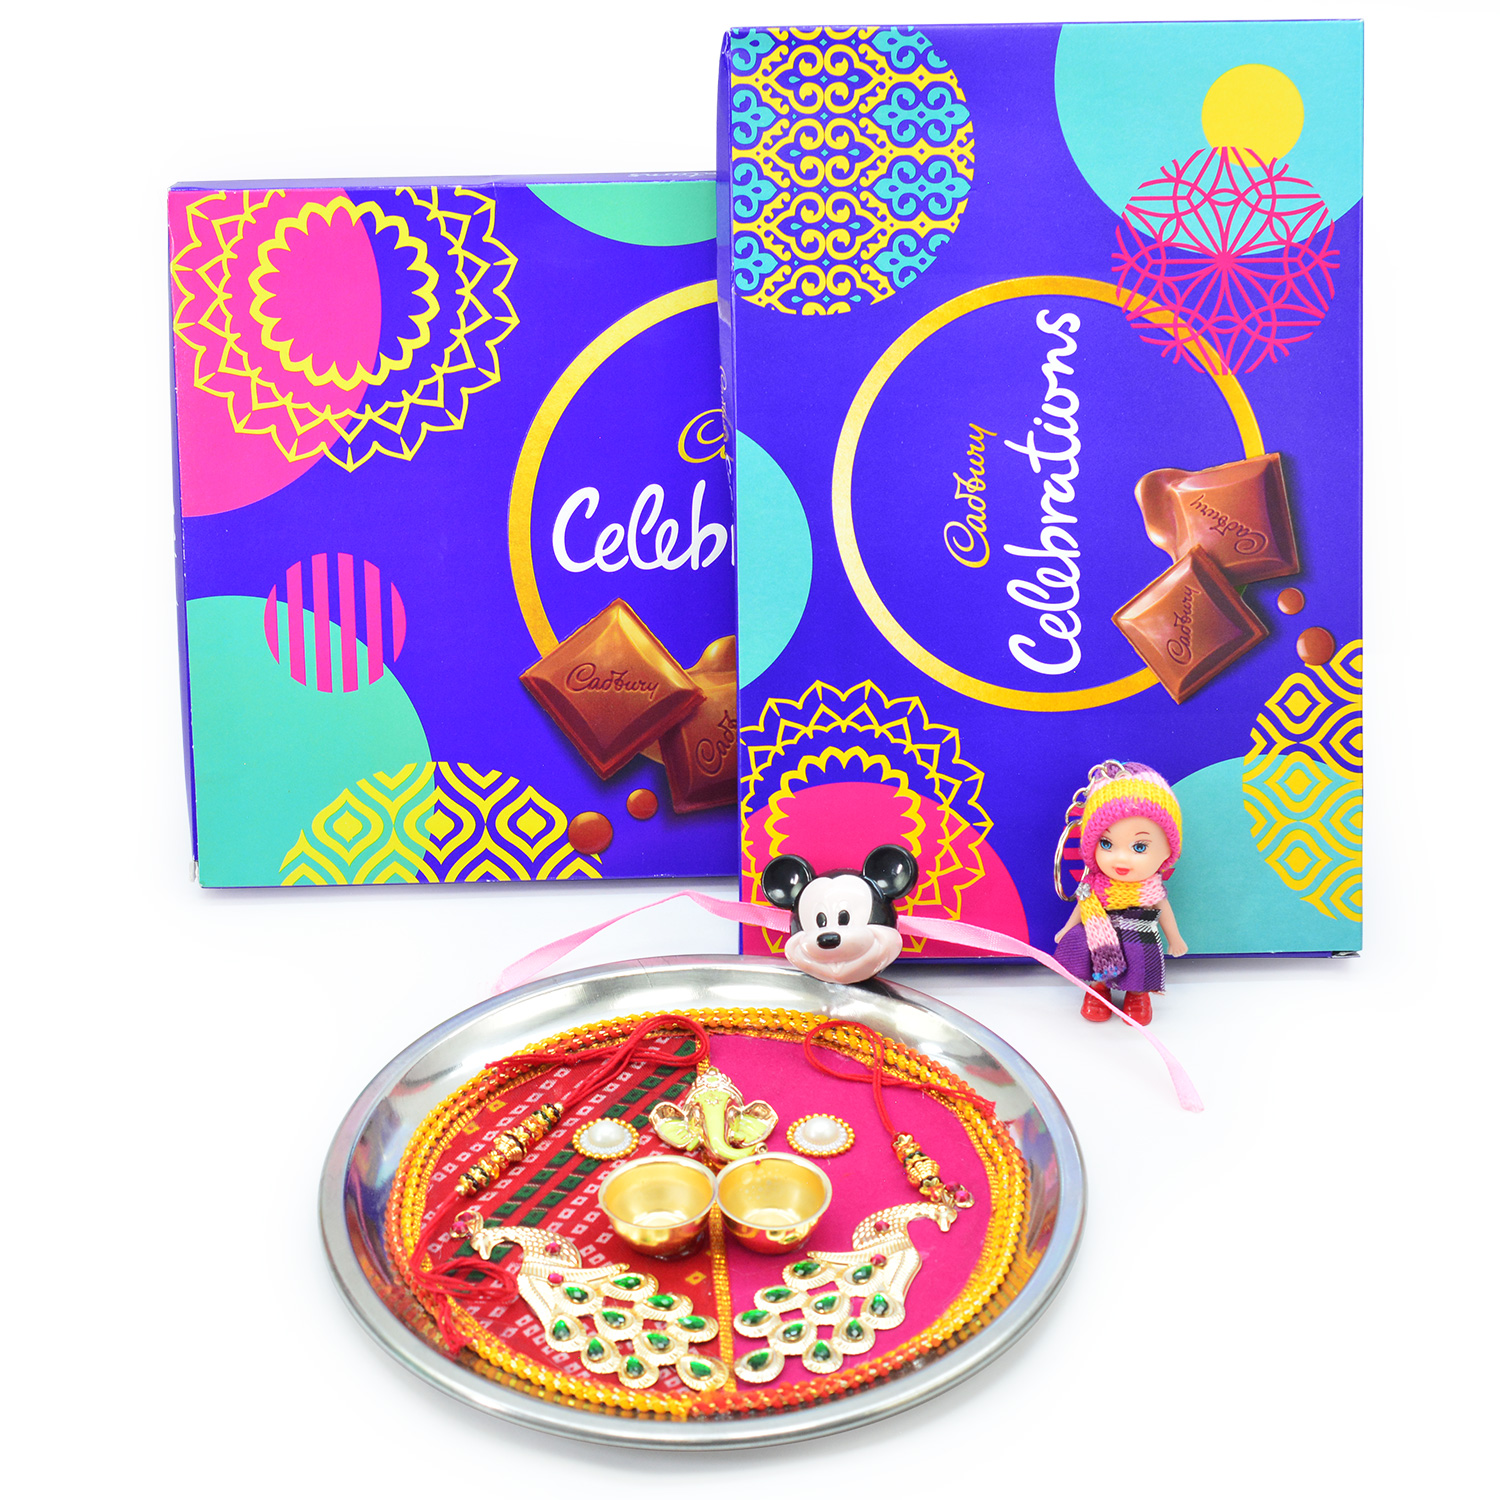 Big and Small Pack of Cadbury Celebration with Set of Family Rakhis and Pooja Rakhi Thali